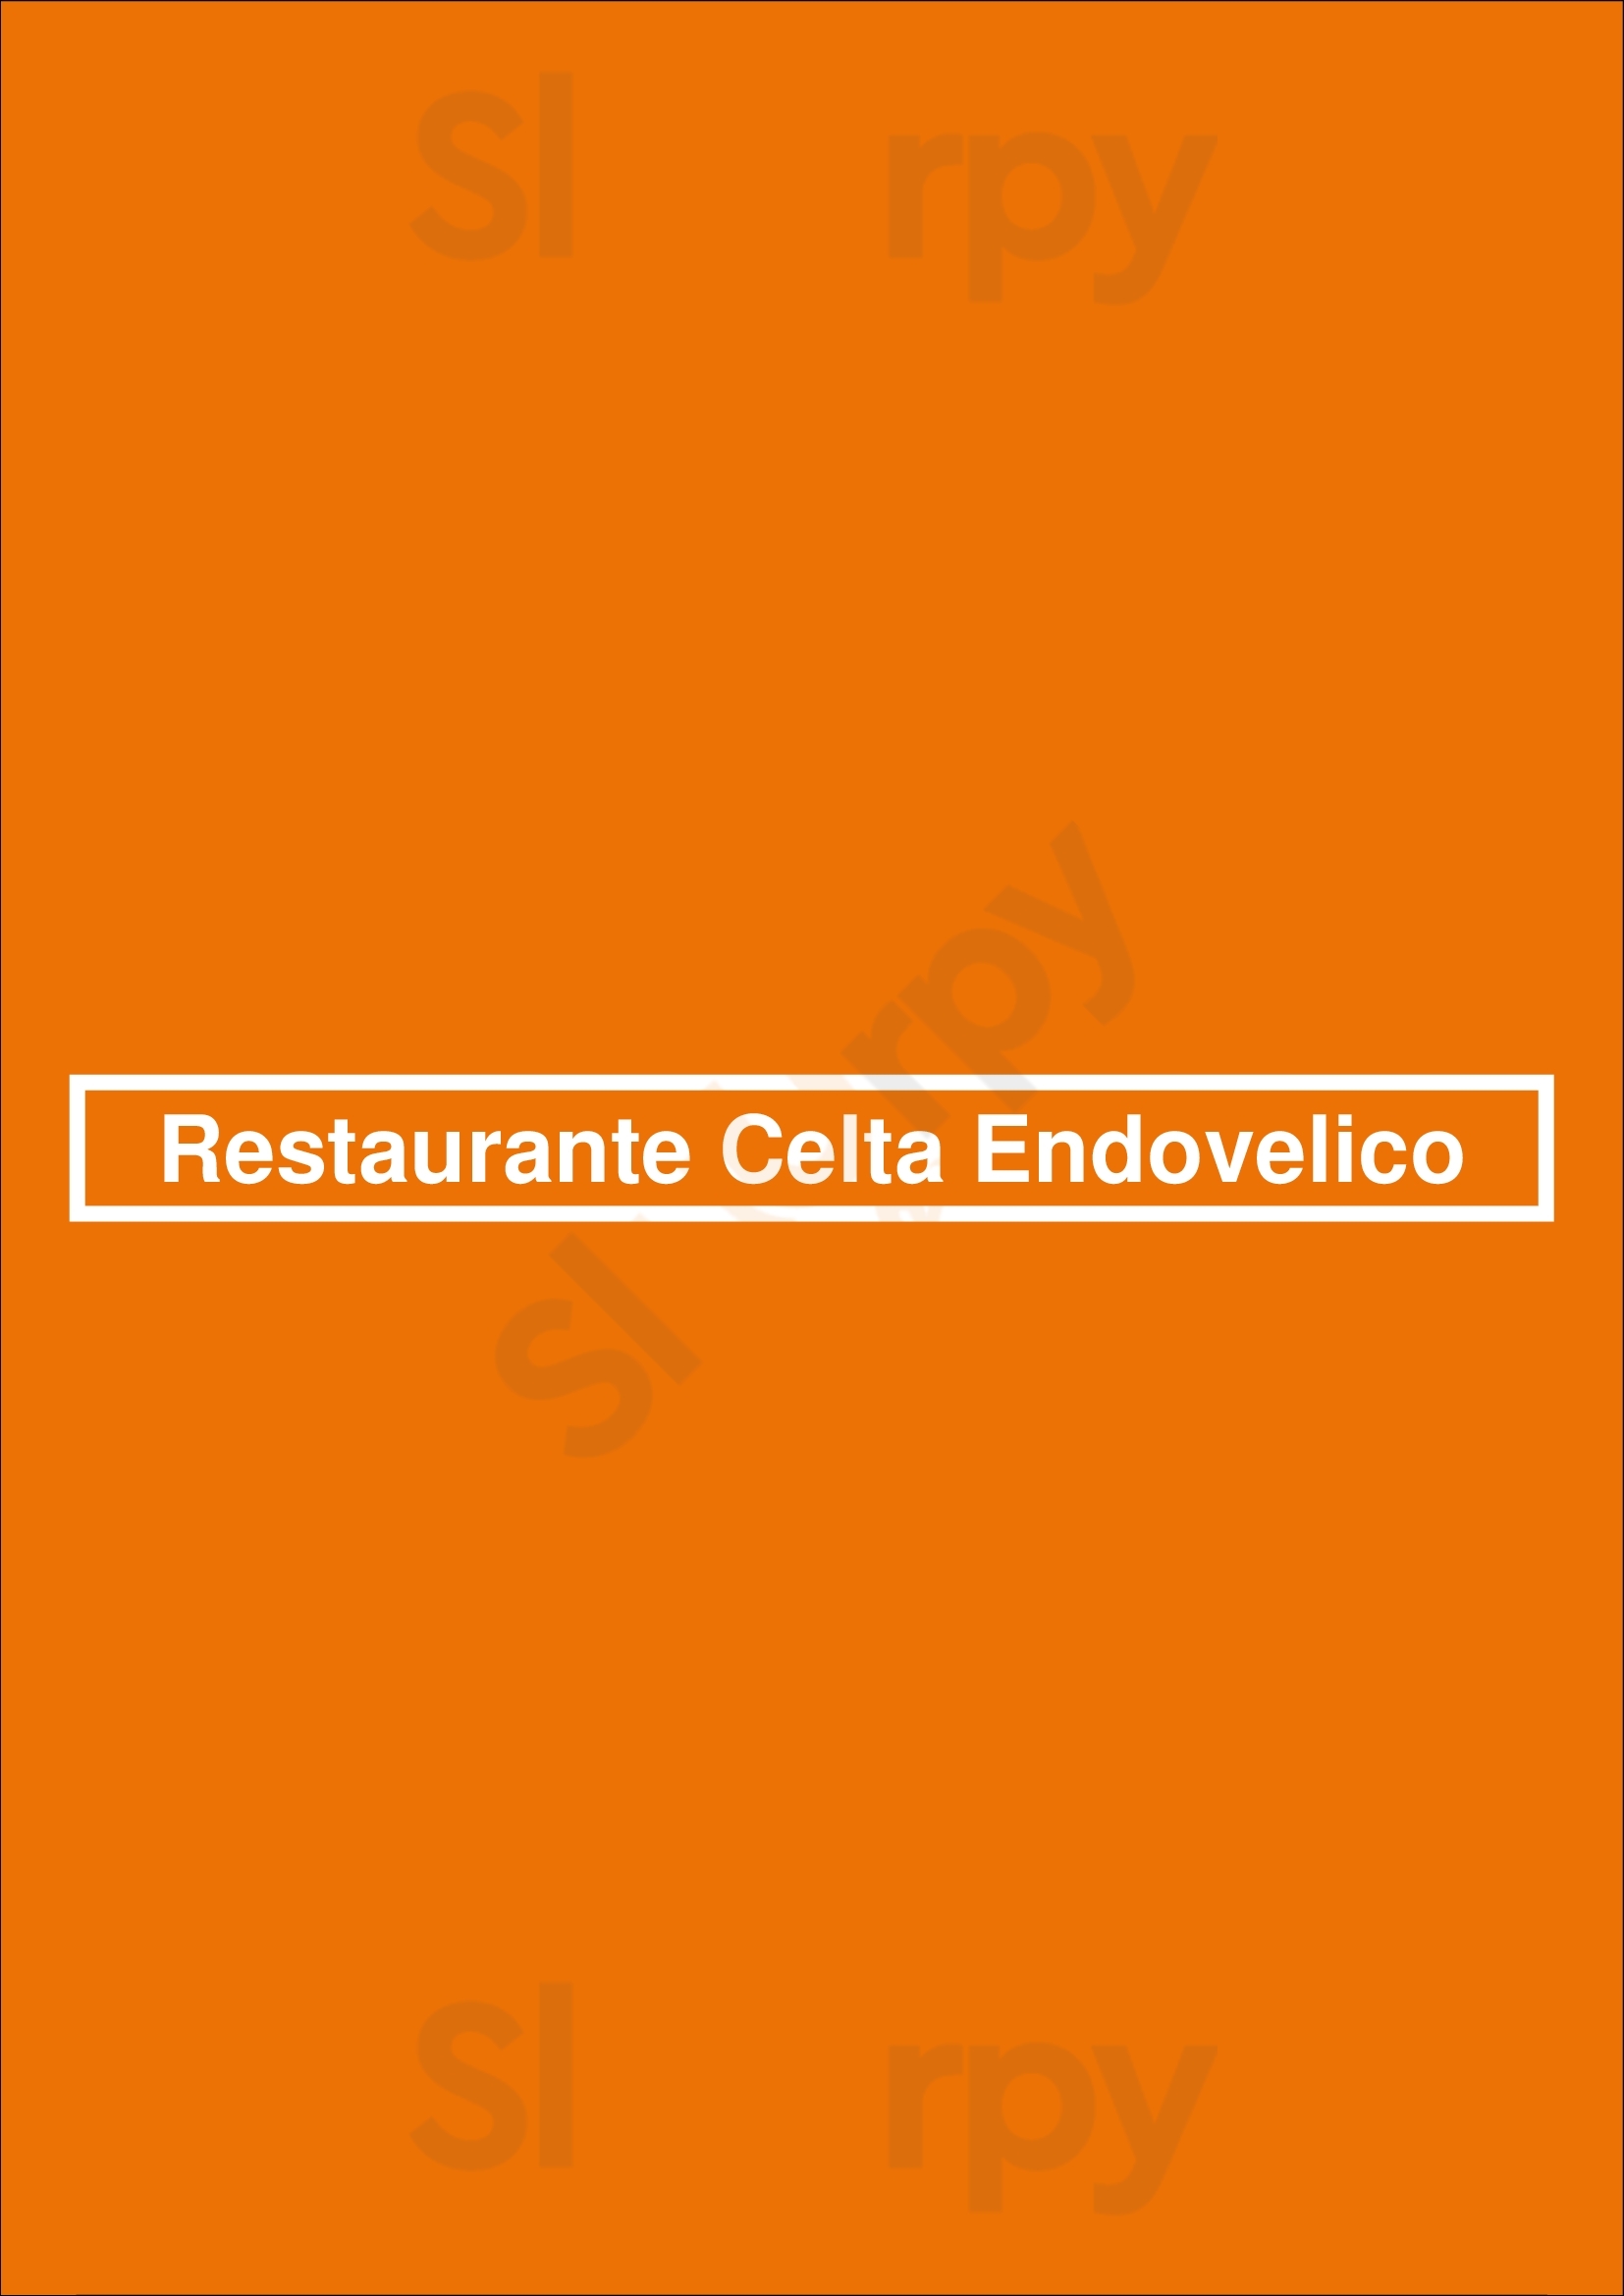 Restaurante Celta Endovelico Porto Menu - 1